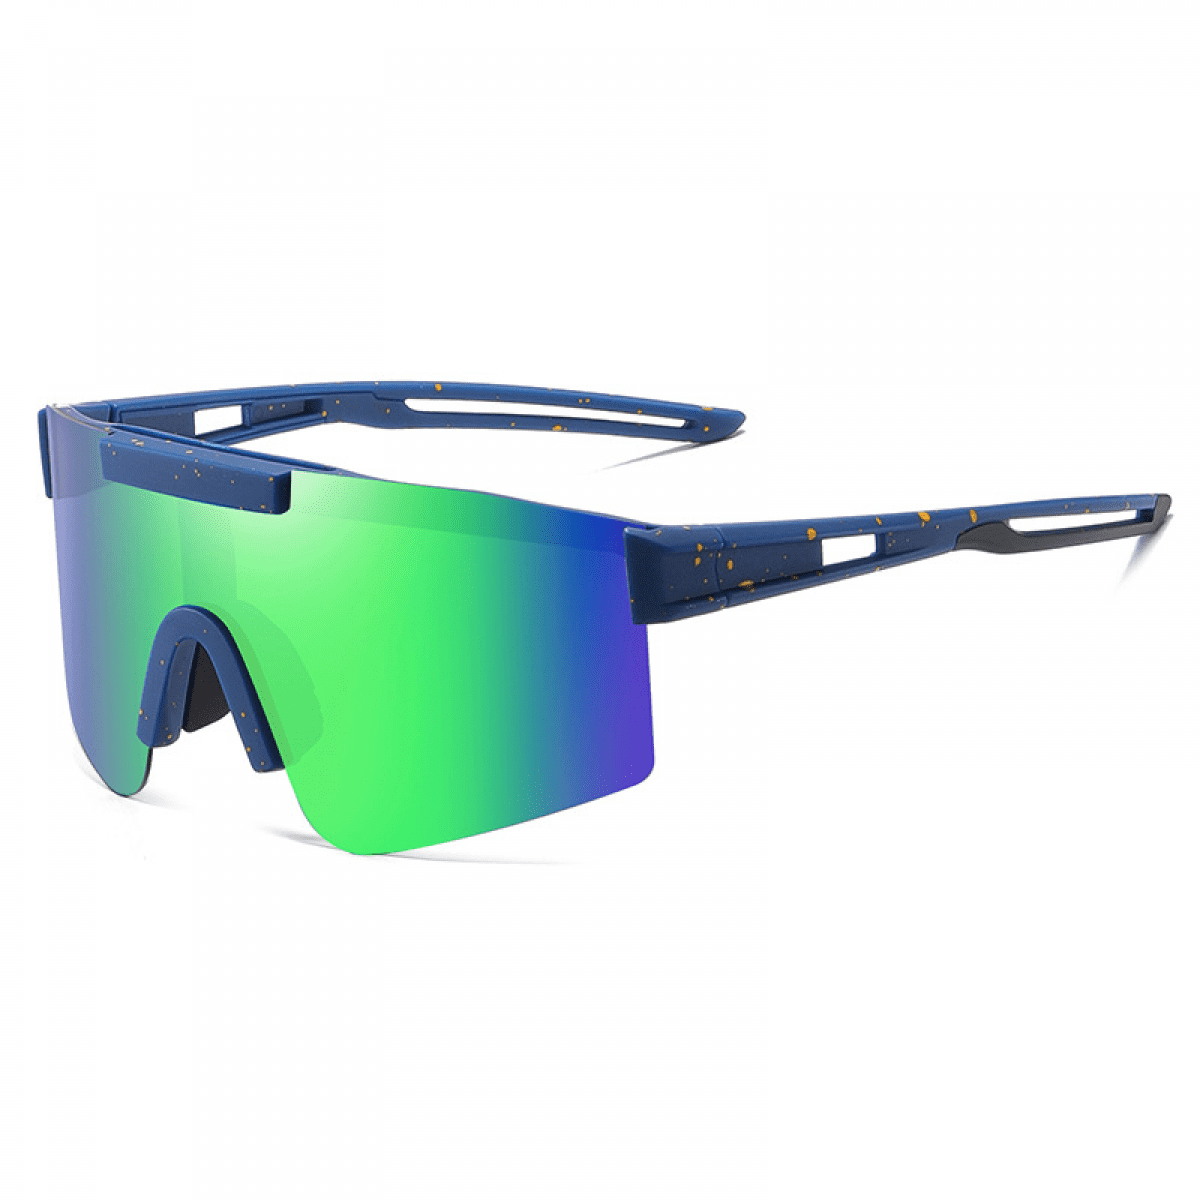 Bike glasses Trap sports glasses polarized Speedcraft cycling glasses 3 psc 100% 